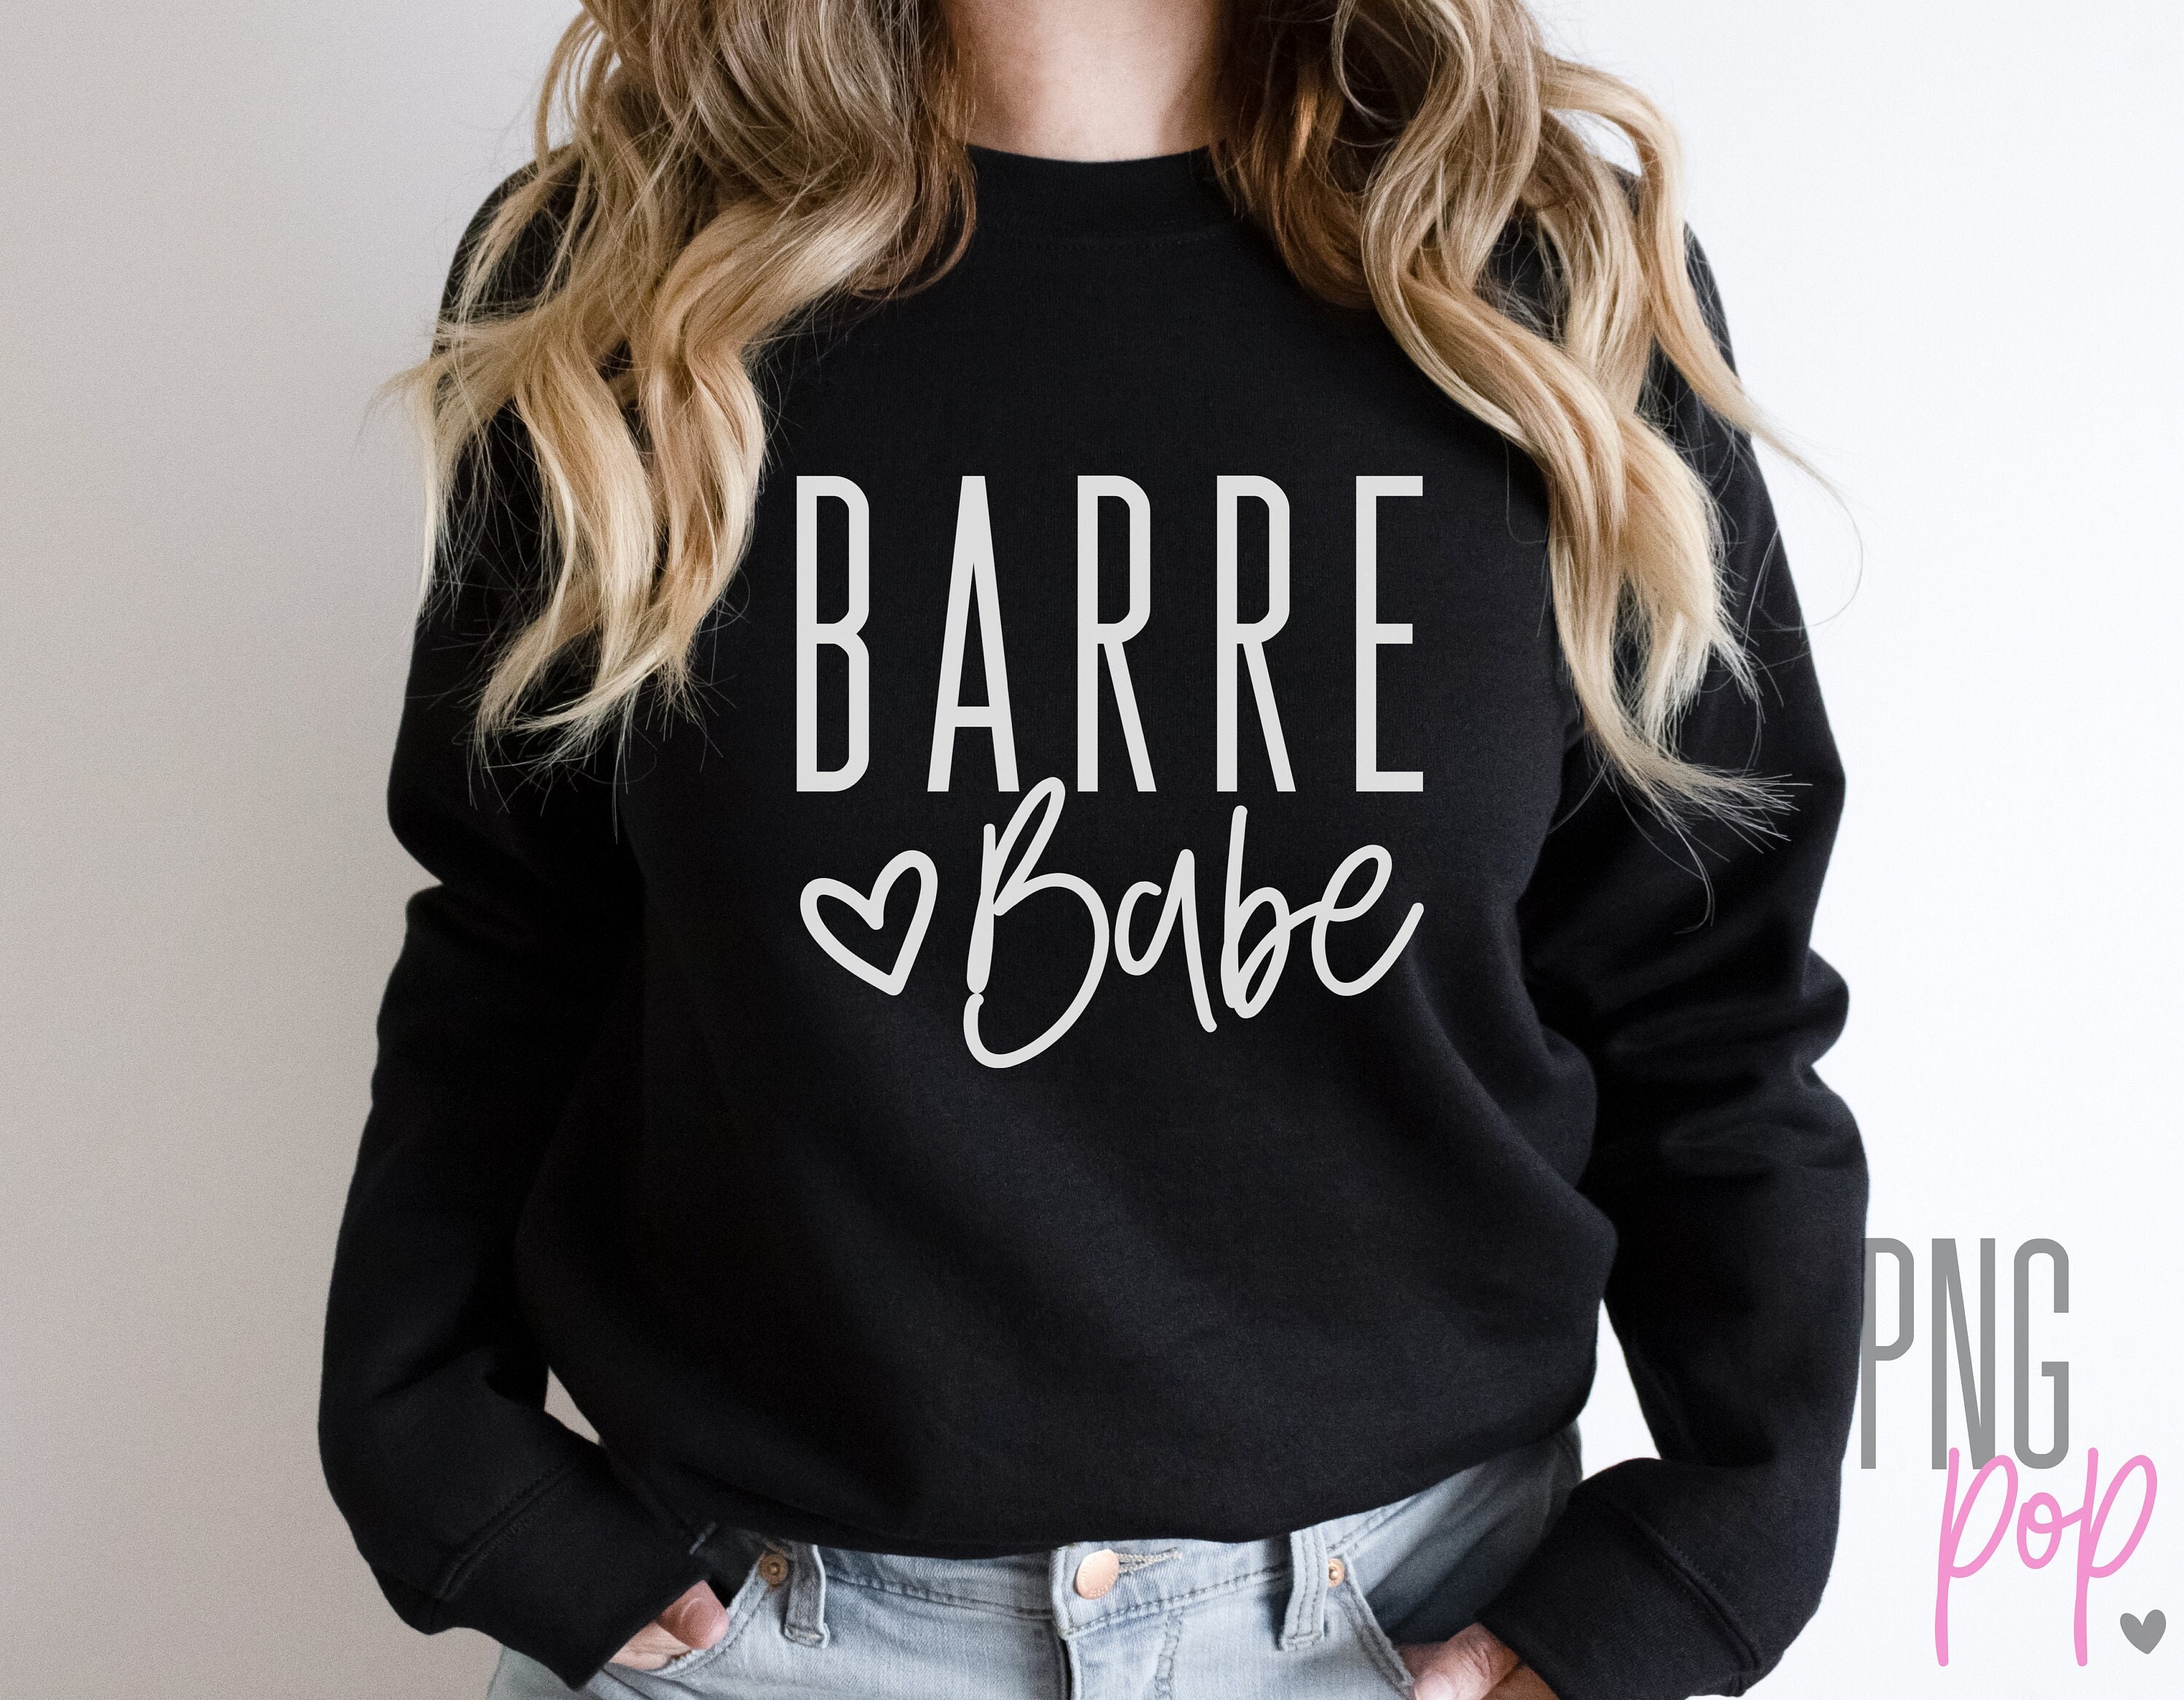 Meet Me at the Barre Tshirt, Barre Shirt, Barre Tee, Barre T Shirt